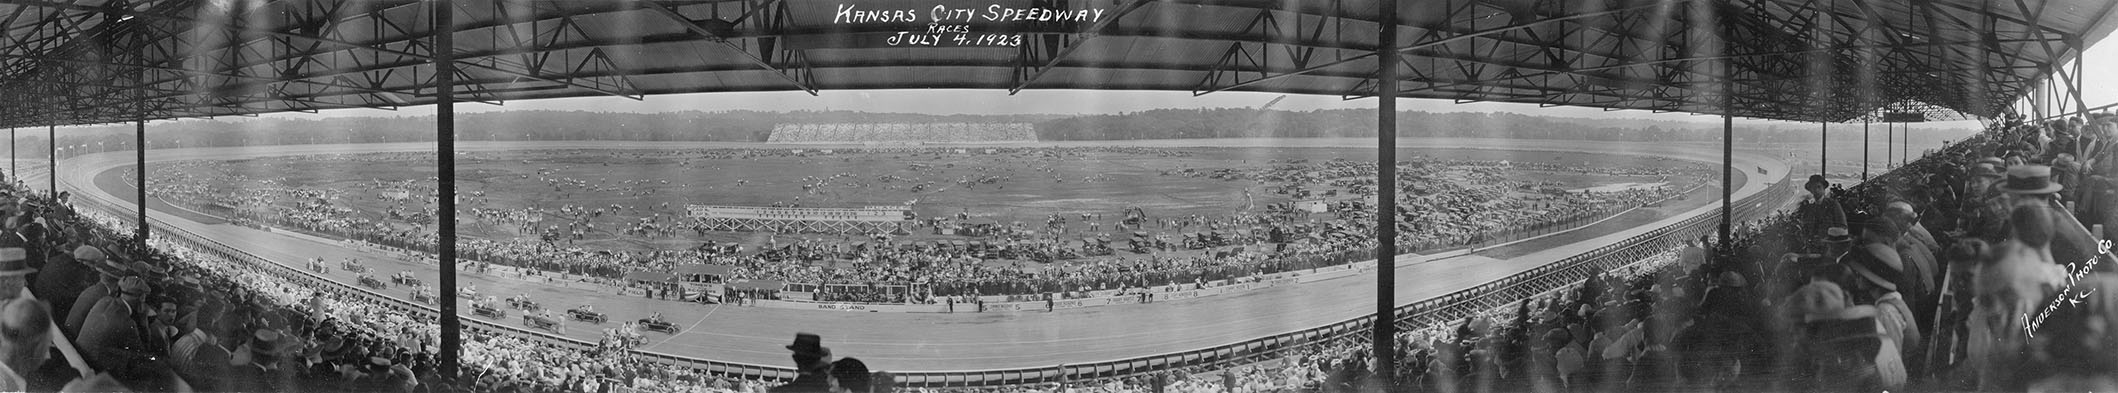 KC Speedway Races 07.04.23